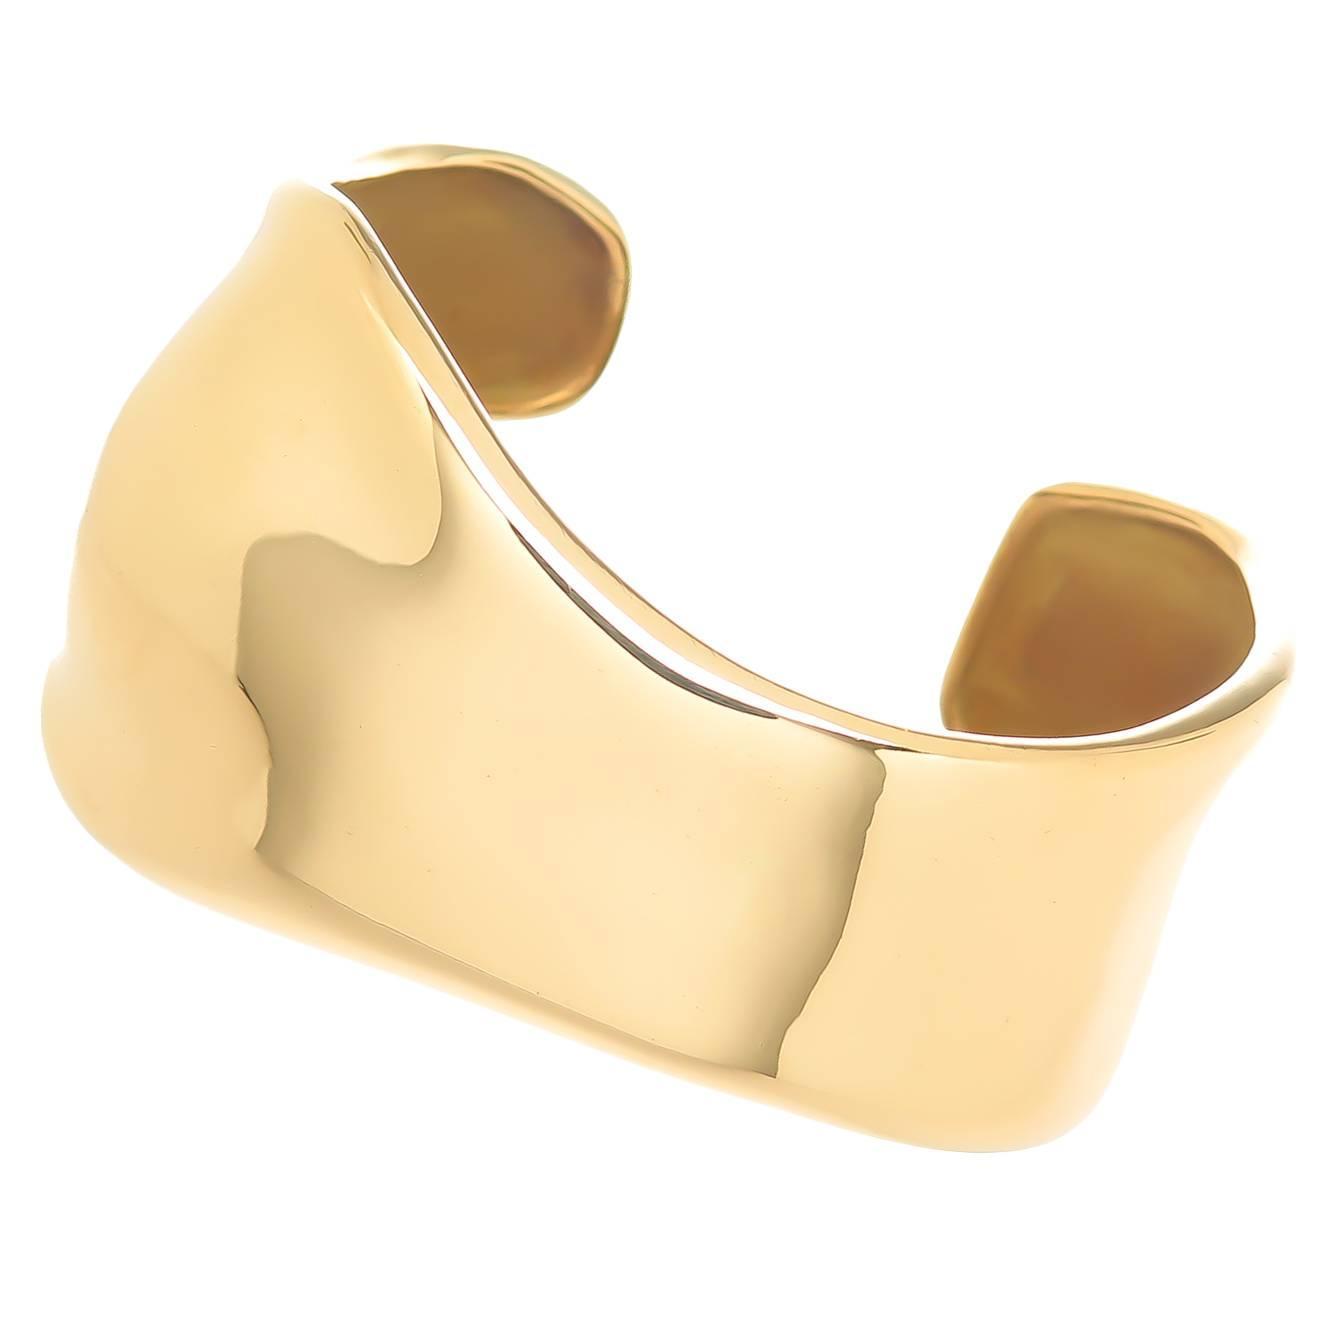 Tiffany and Co. Elsa Peretti Gold Bone Cuff Bracelet at 1stdibs